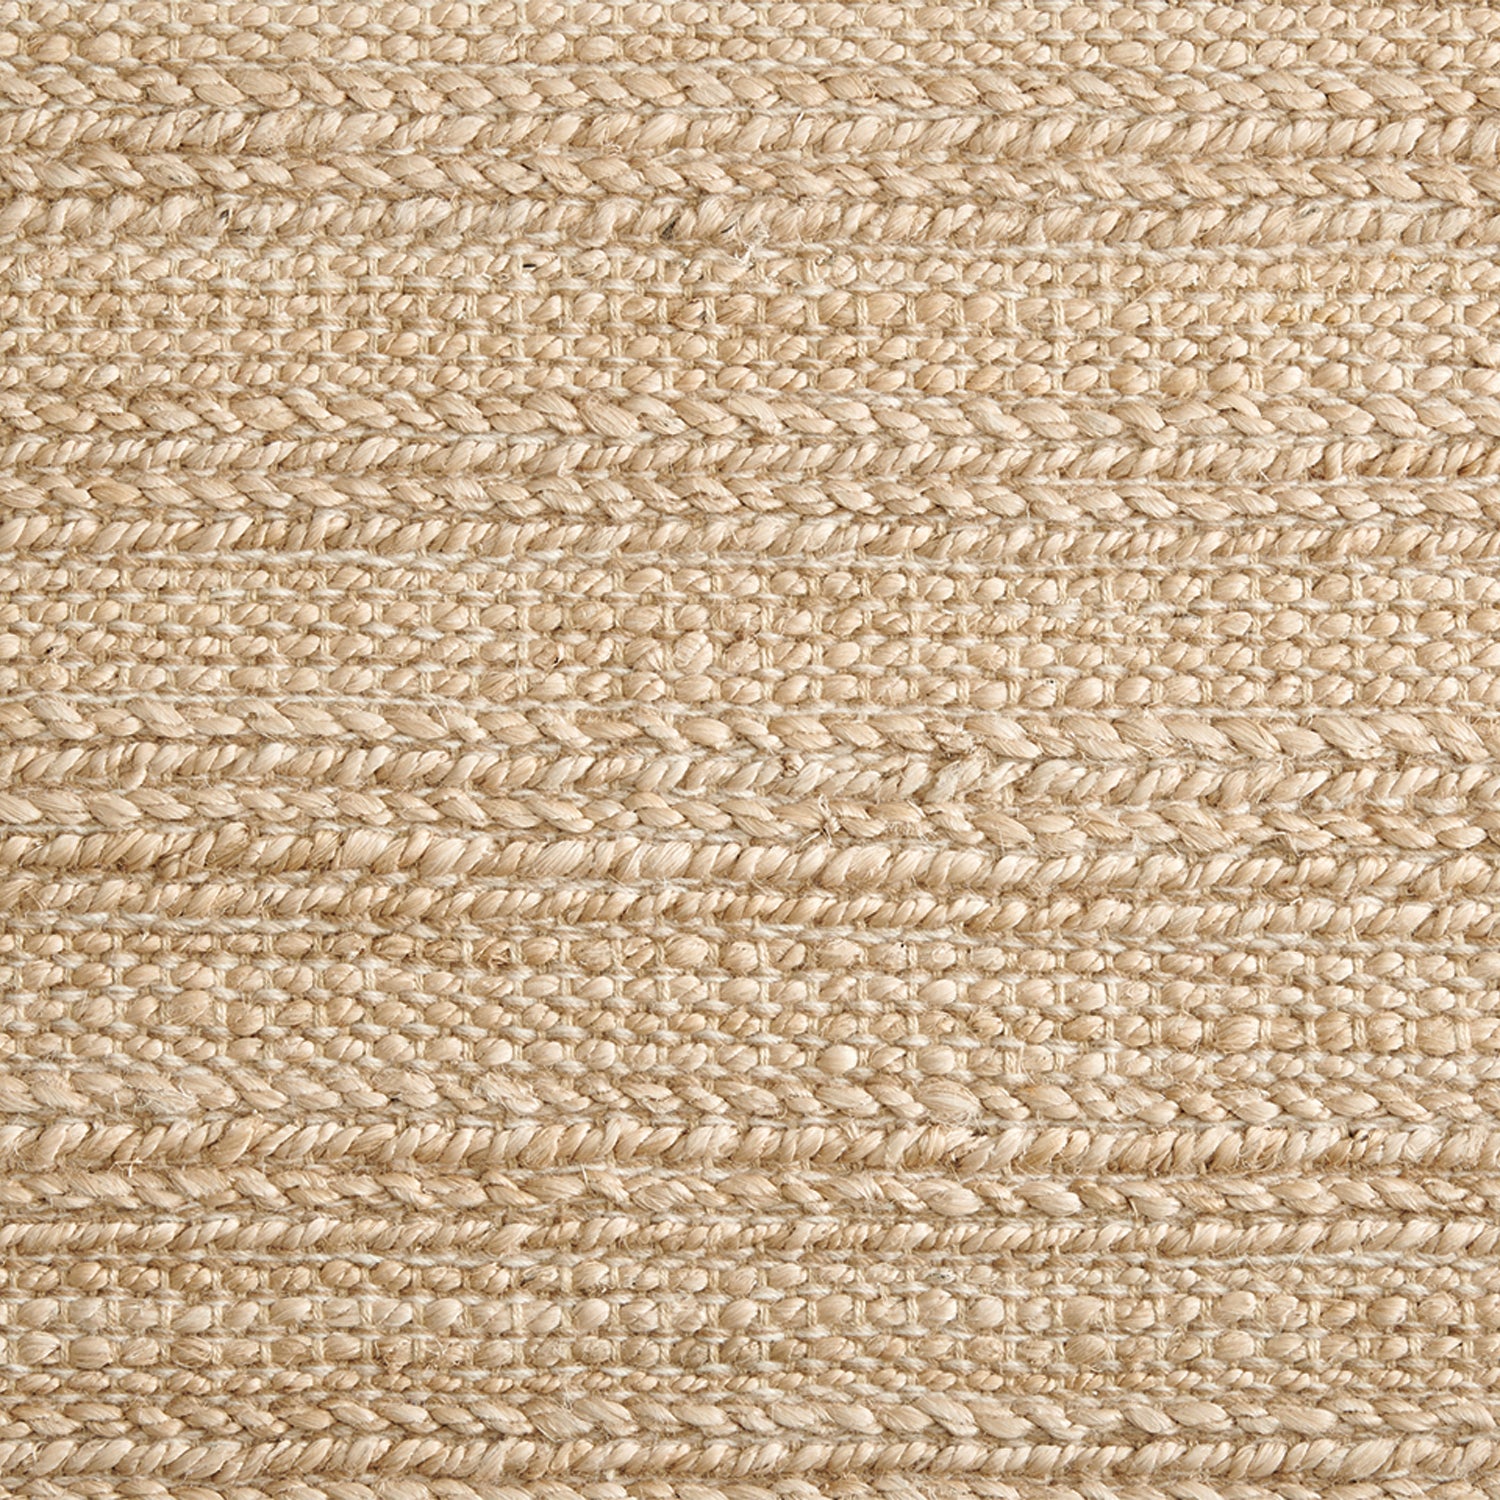 Jute broadloom carpet swatch in a flatweave in a tan shade.